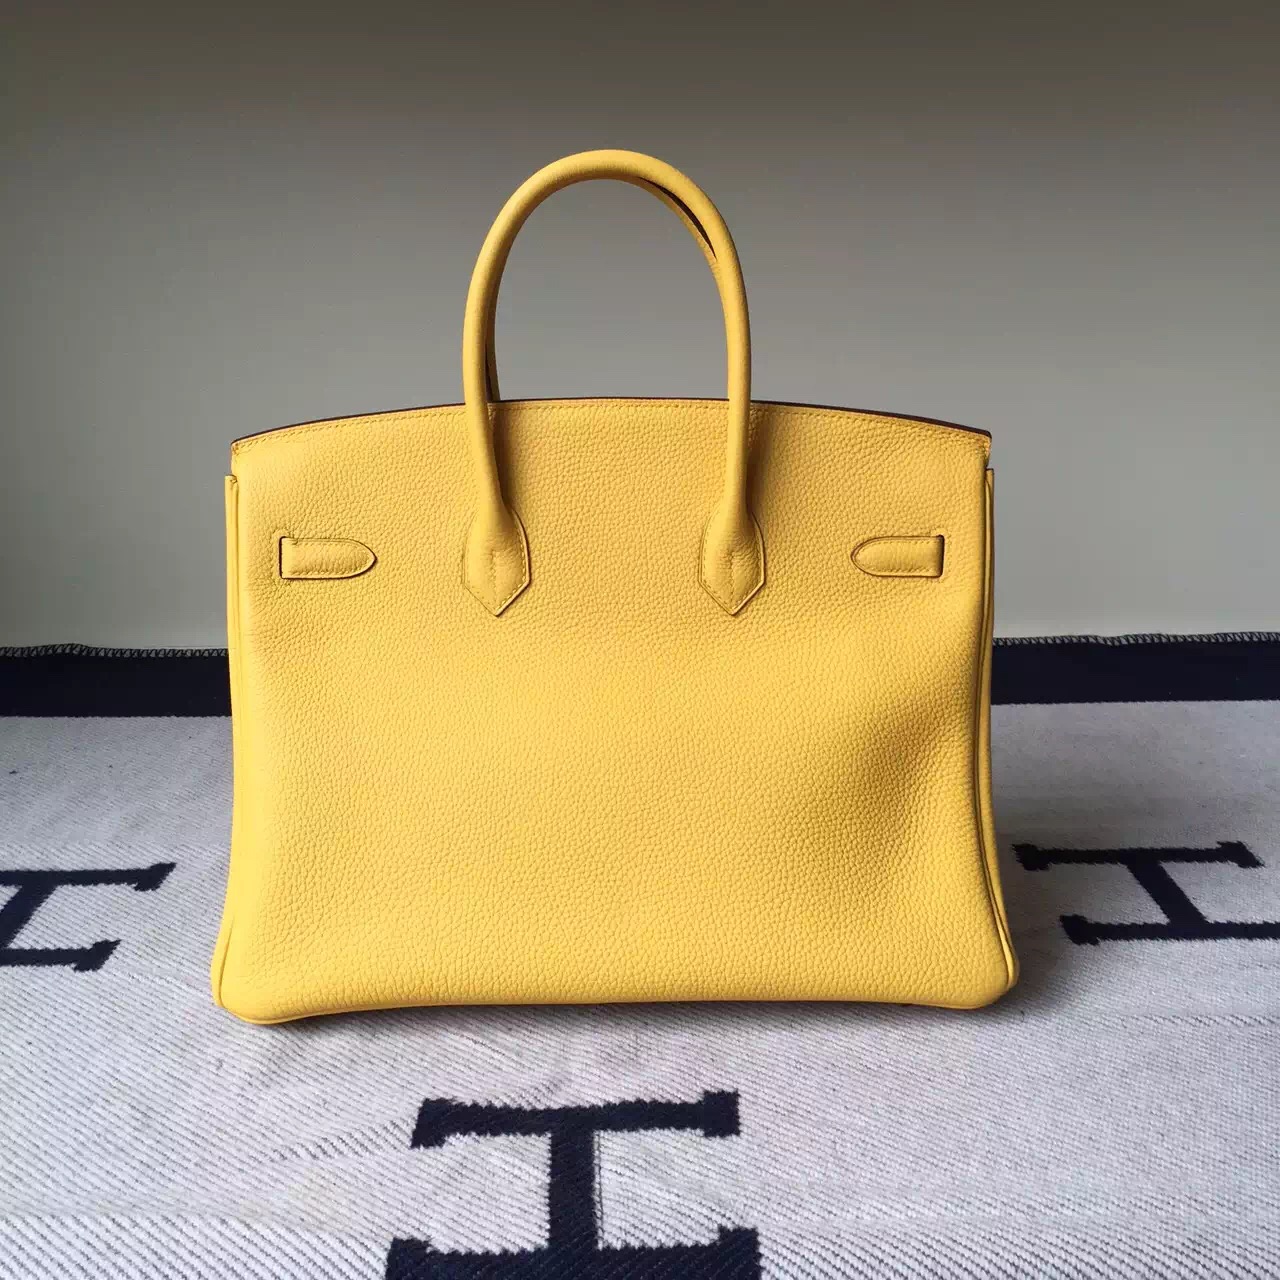 Discount Hermes Togo Calfskin Birkin35cm Bag in Fennel Yellow